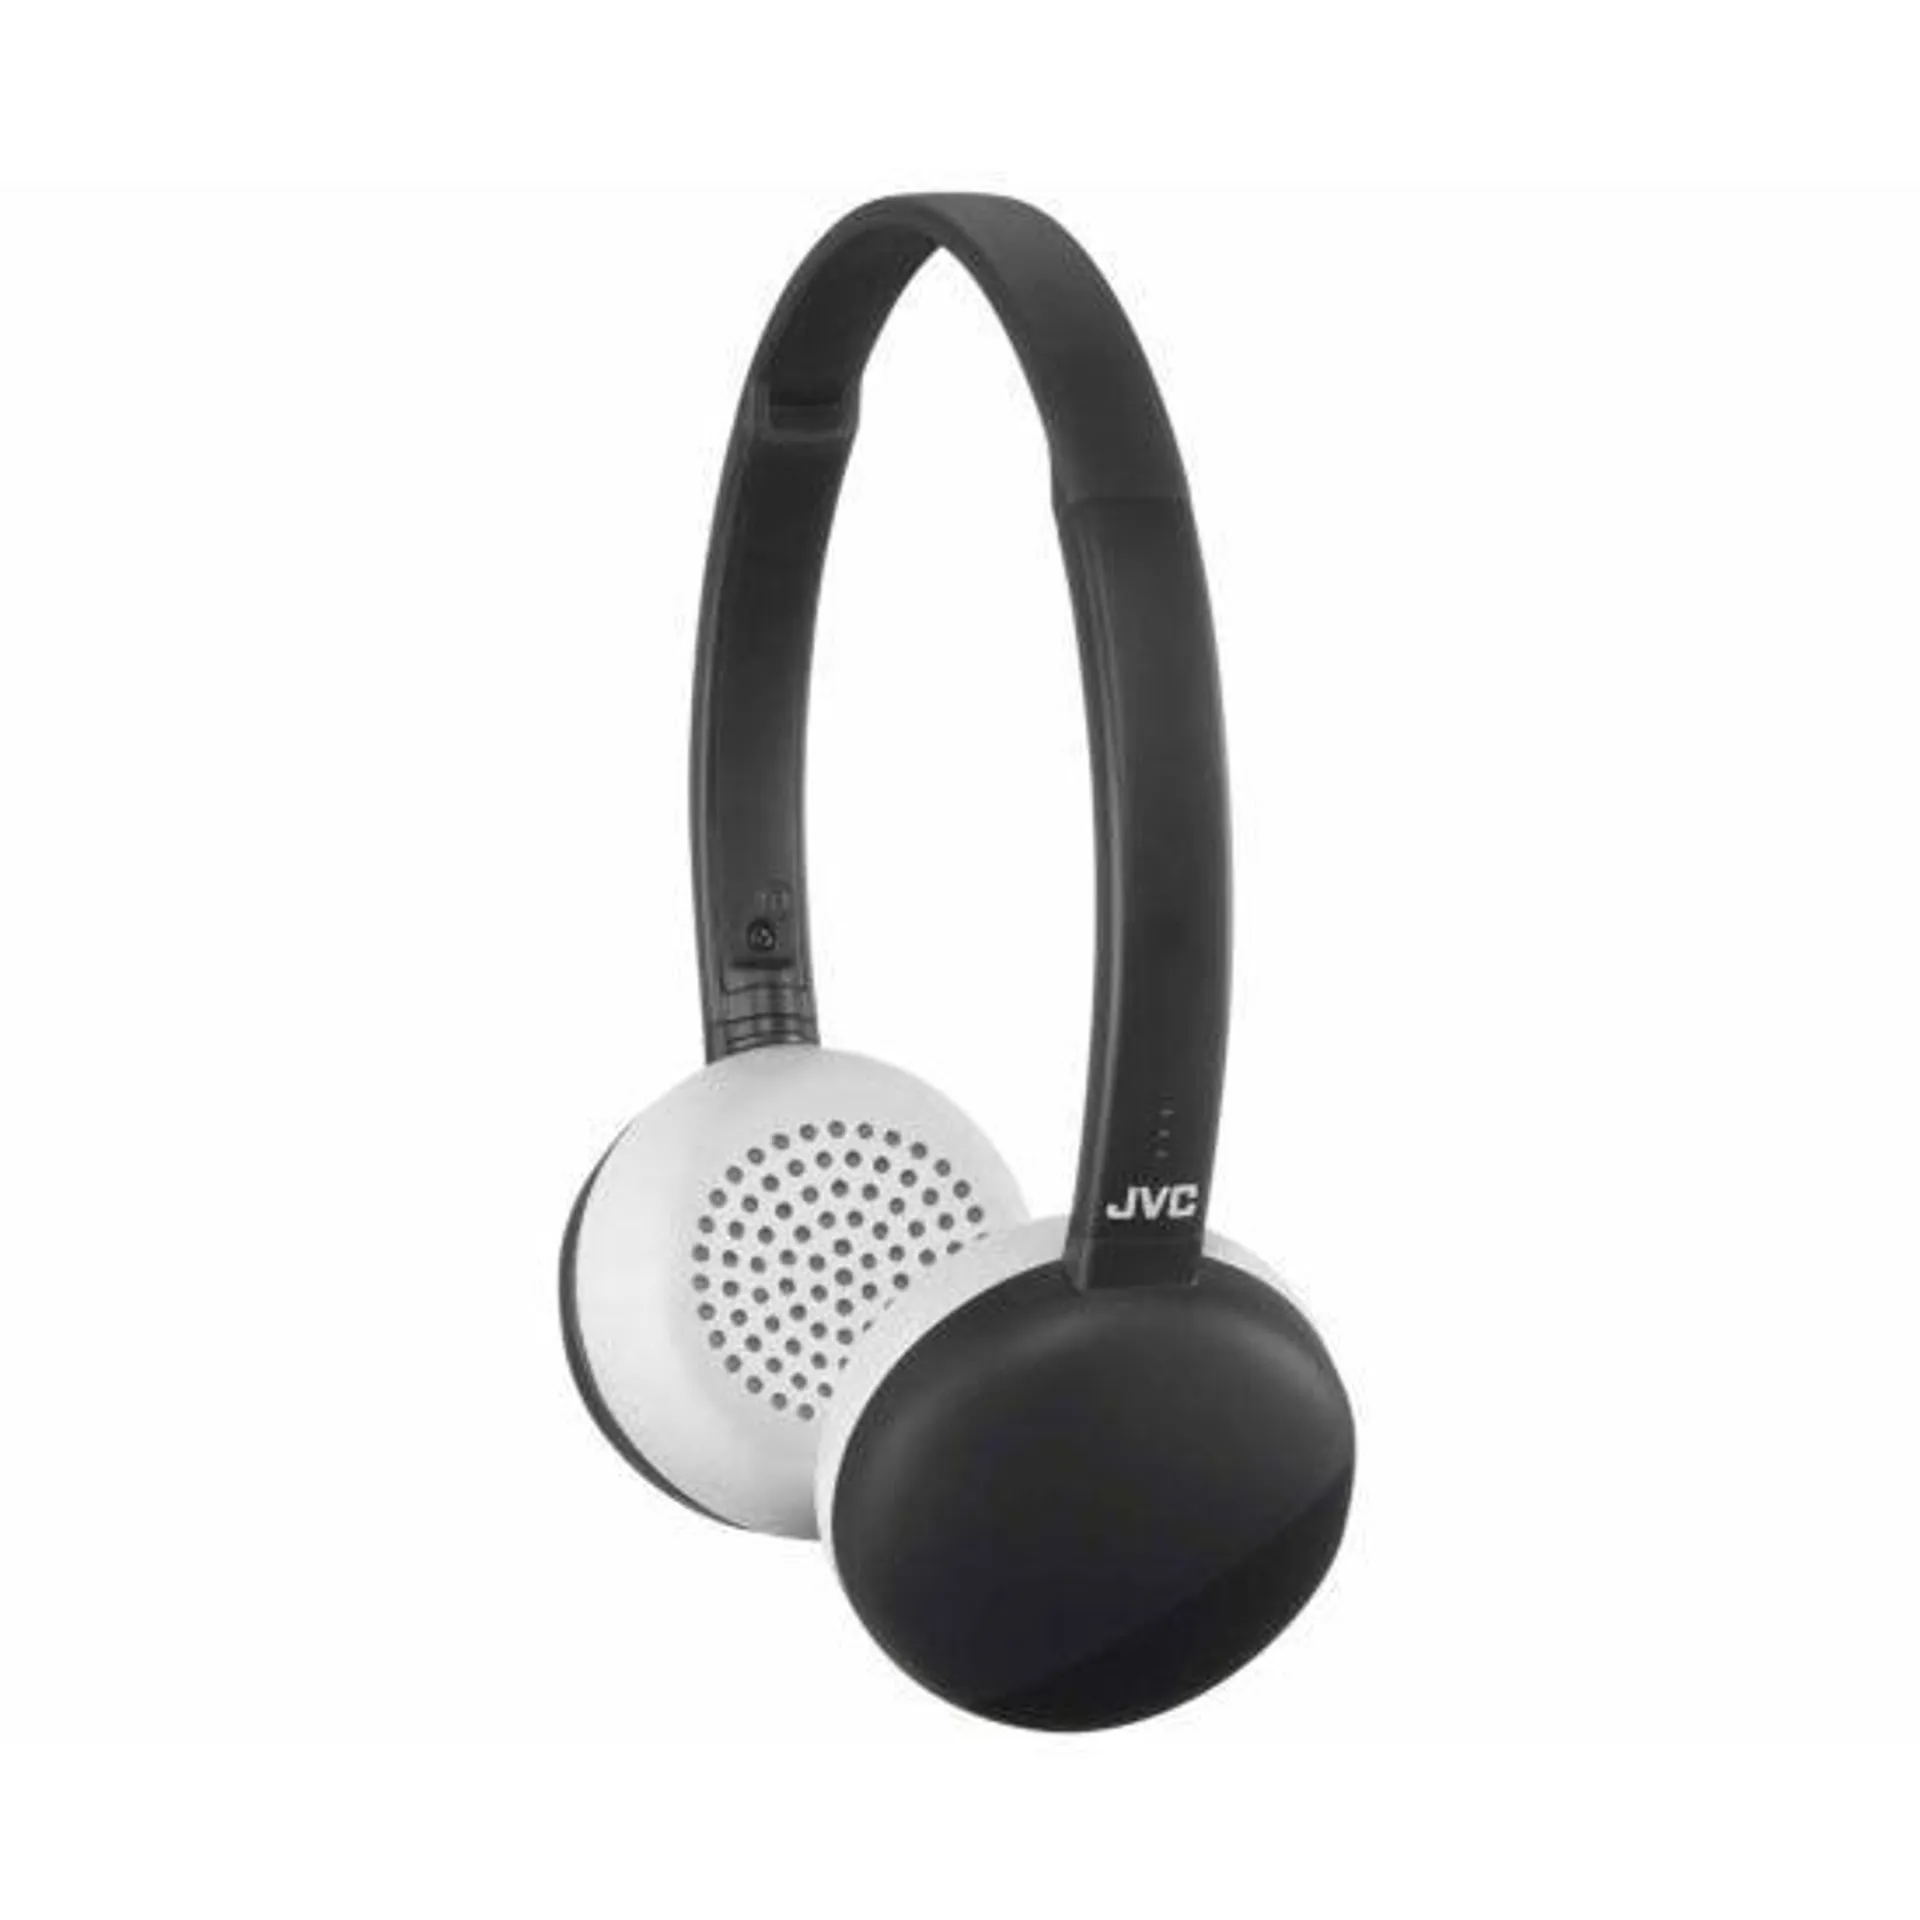 JVC HA-S20BT Flats Wireless Foldable Headphones